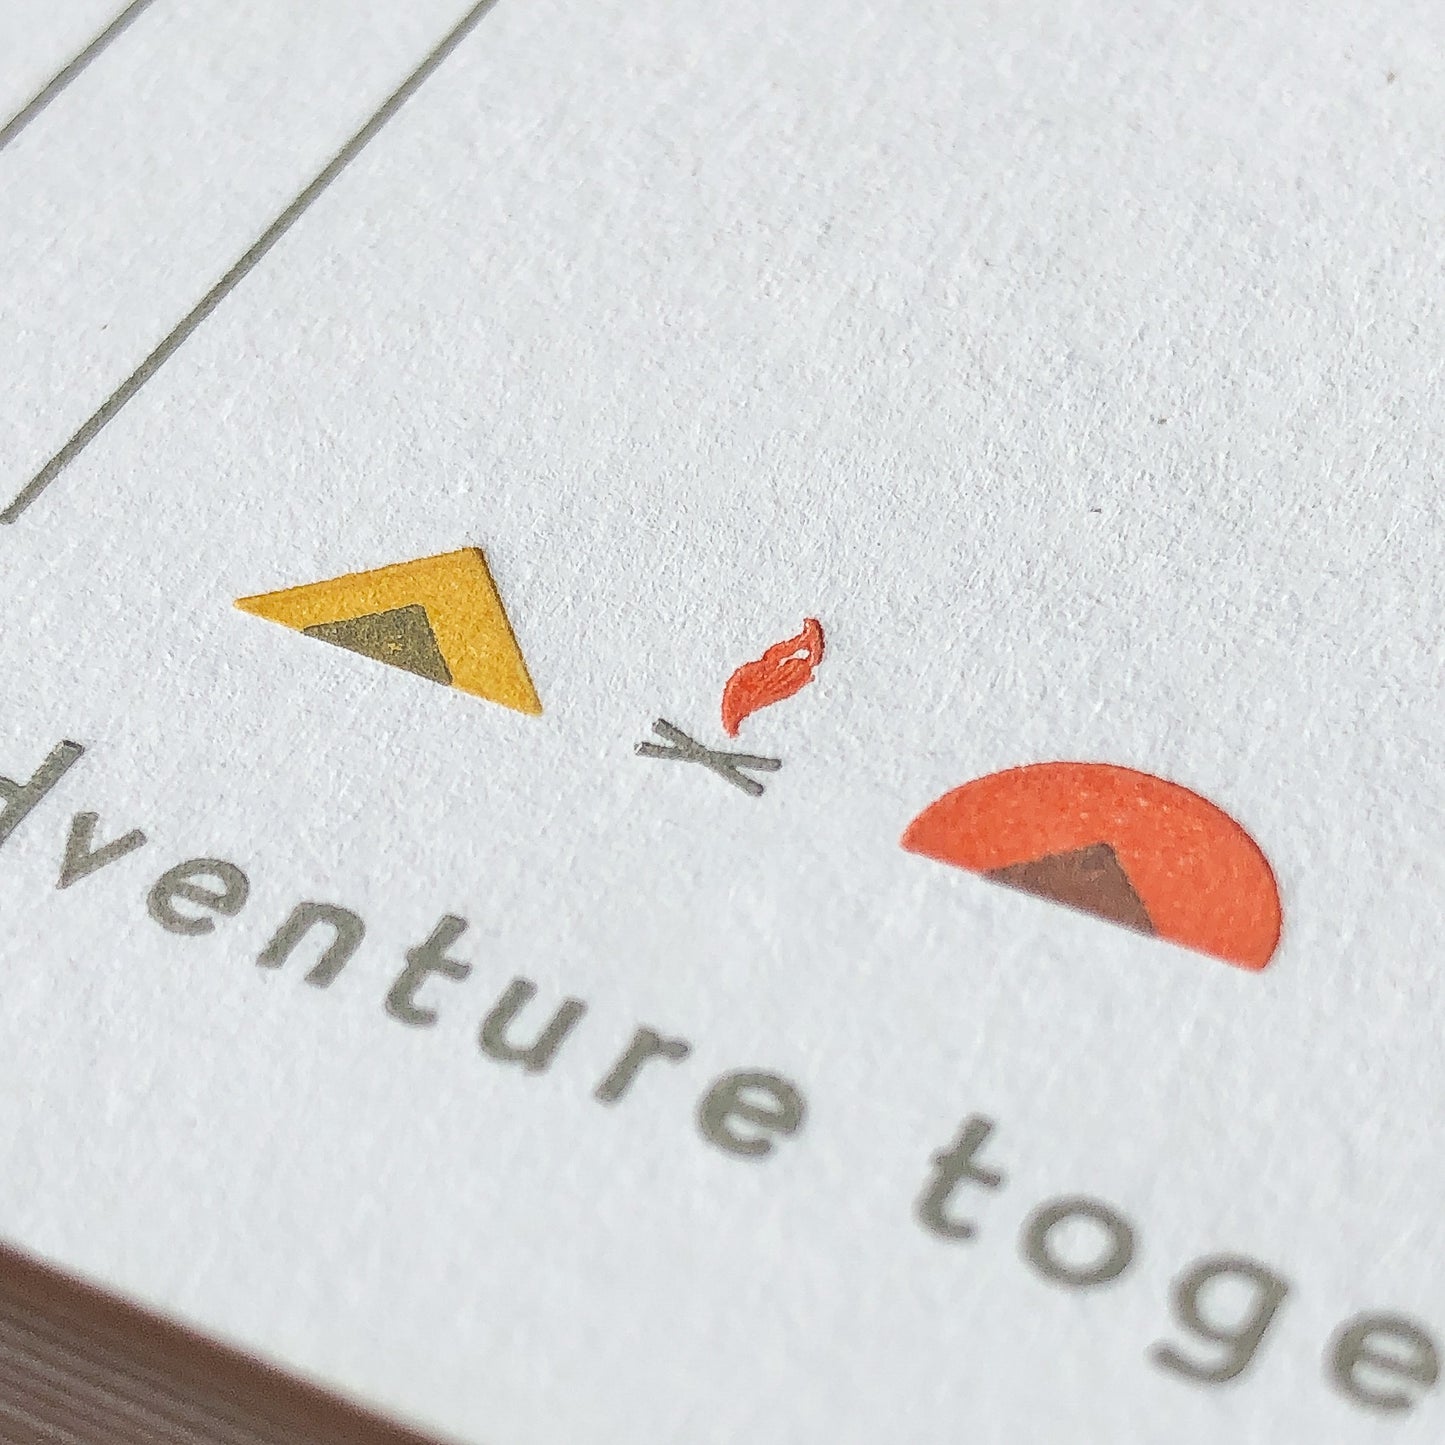 Let's Adventure Together Card